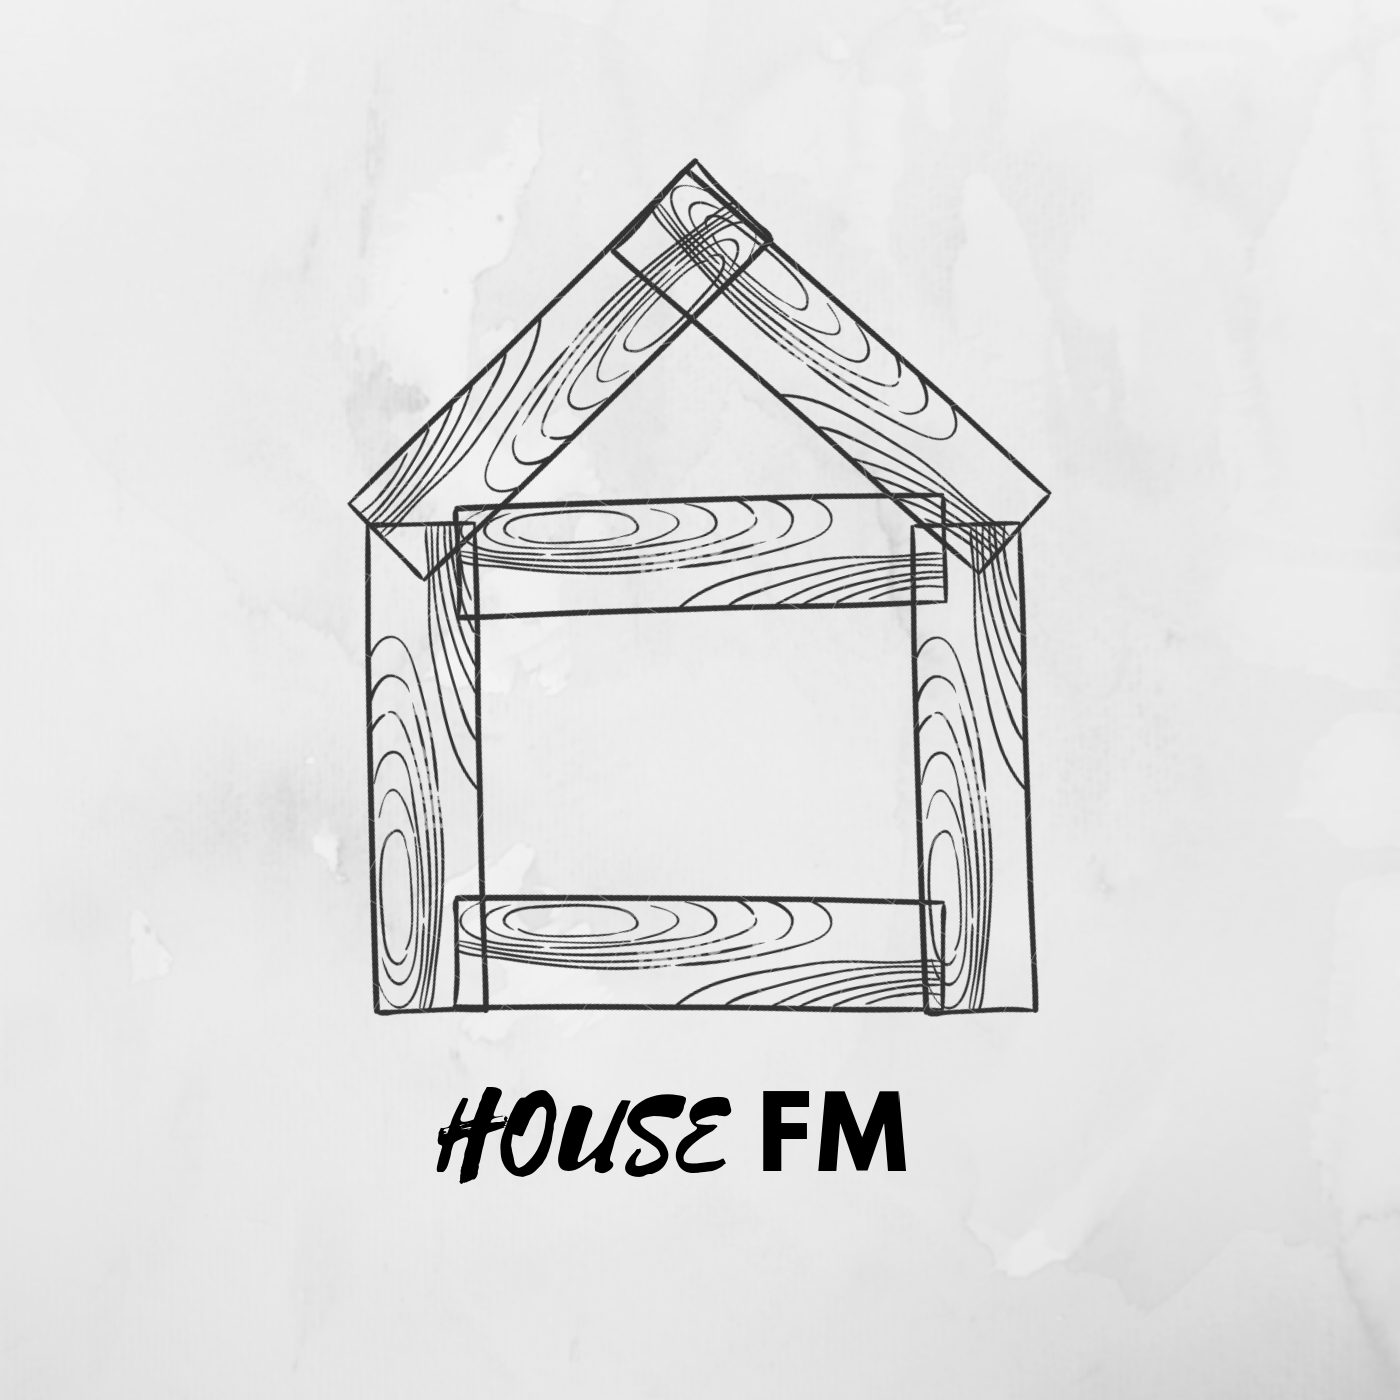 HOUSE FM